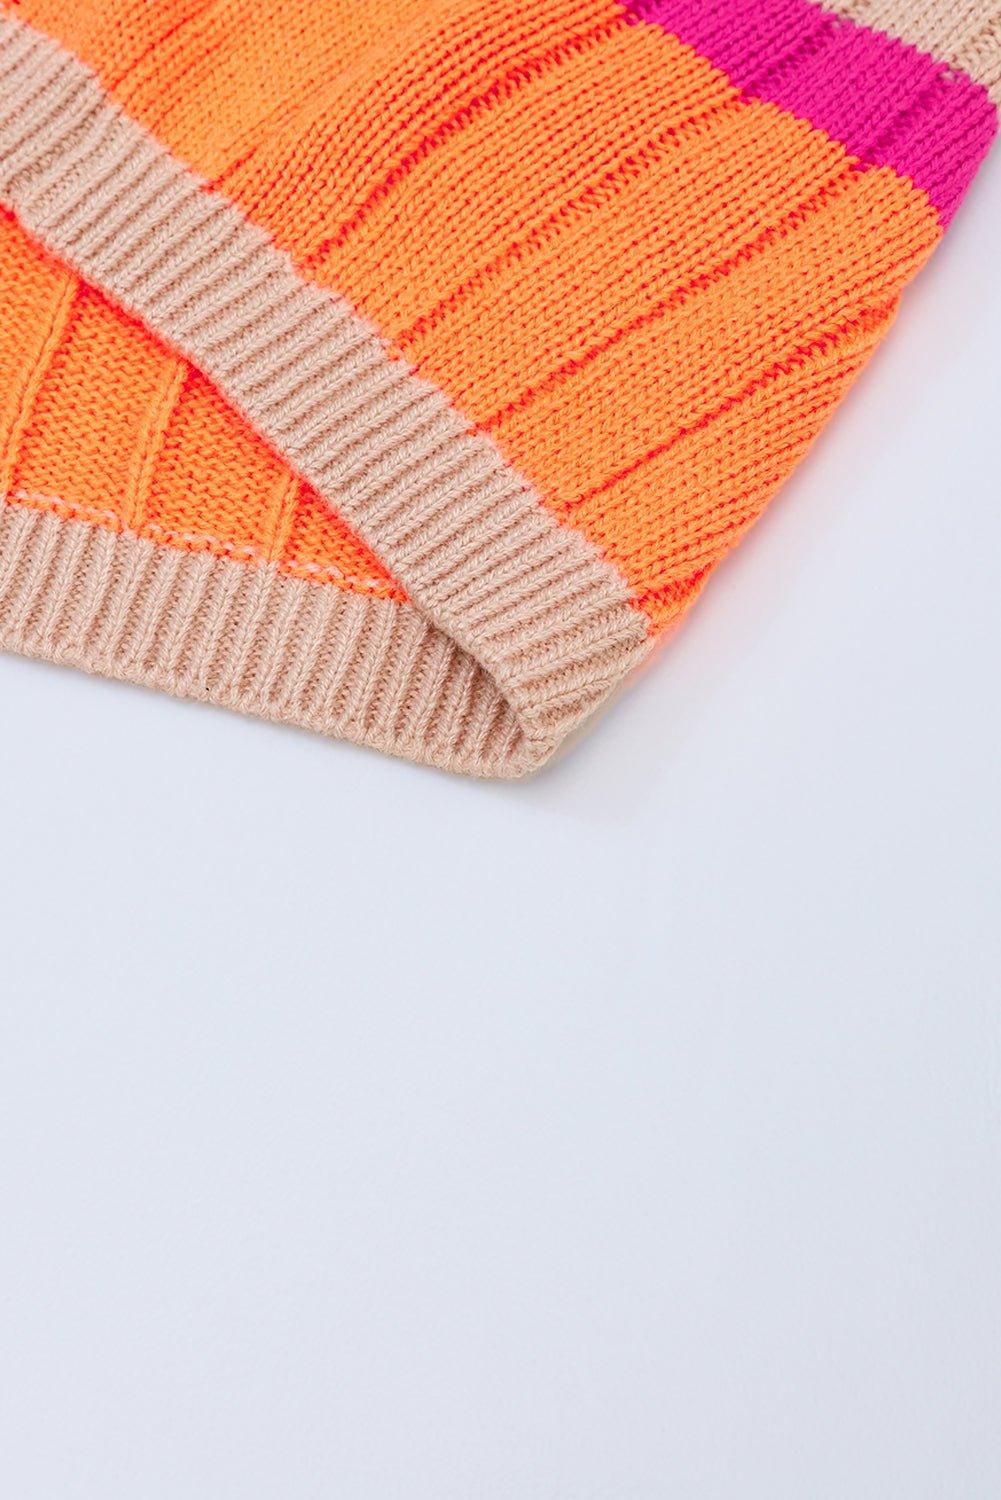 Slouchy Orange Striped Cardigan - Klazzi Fashion Boutique